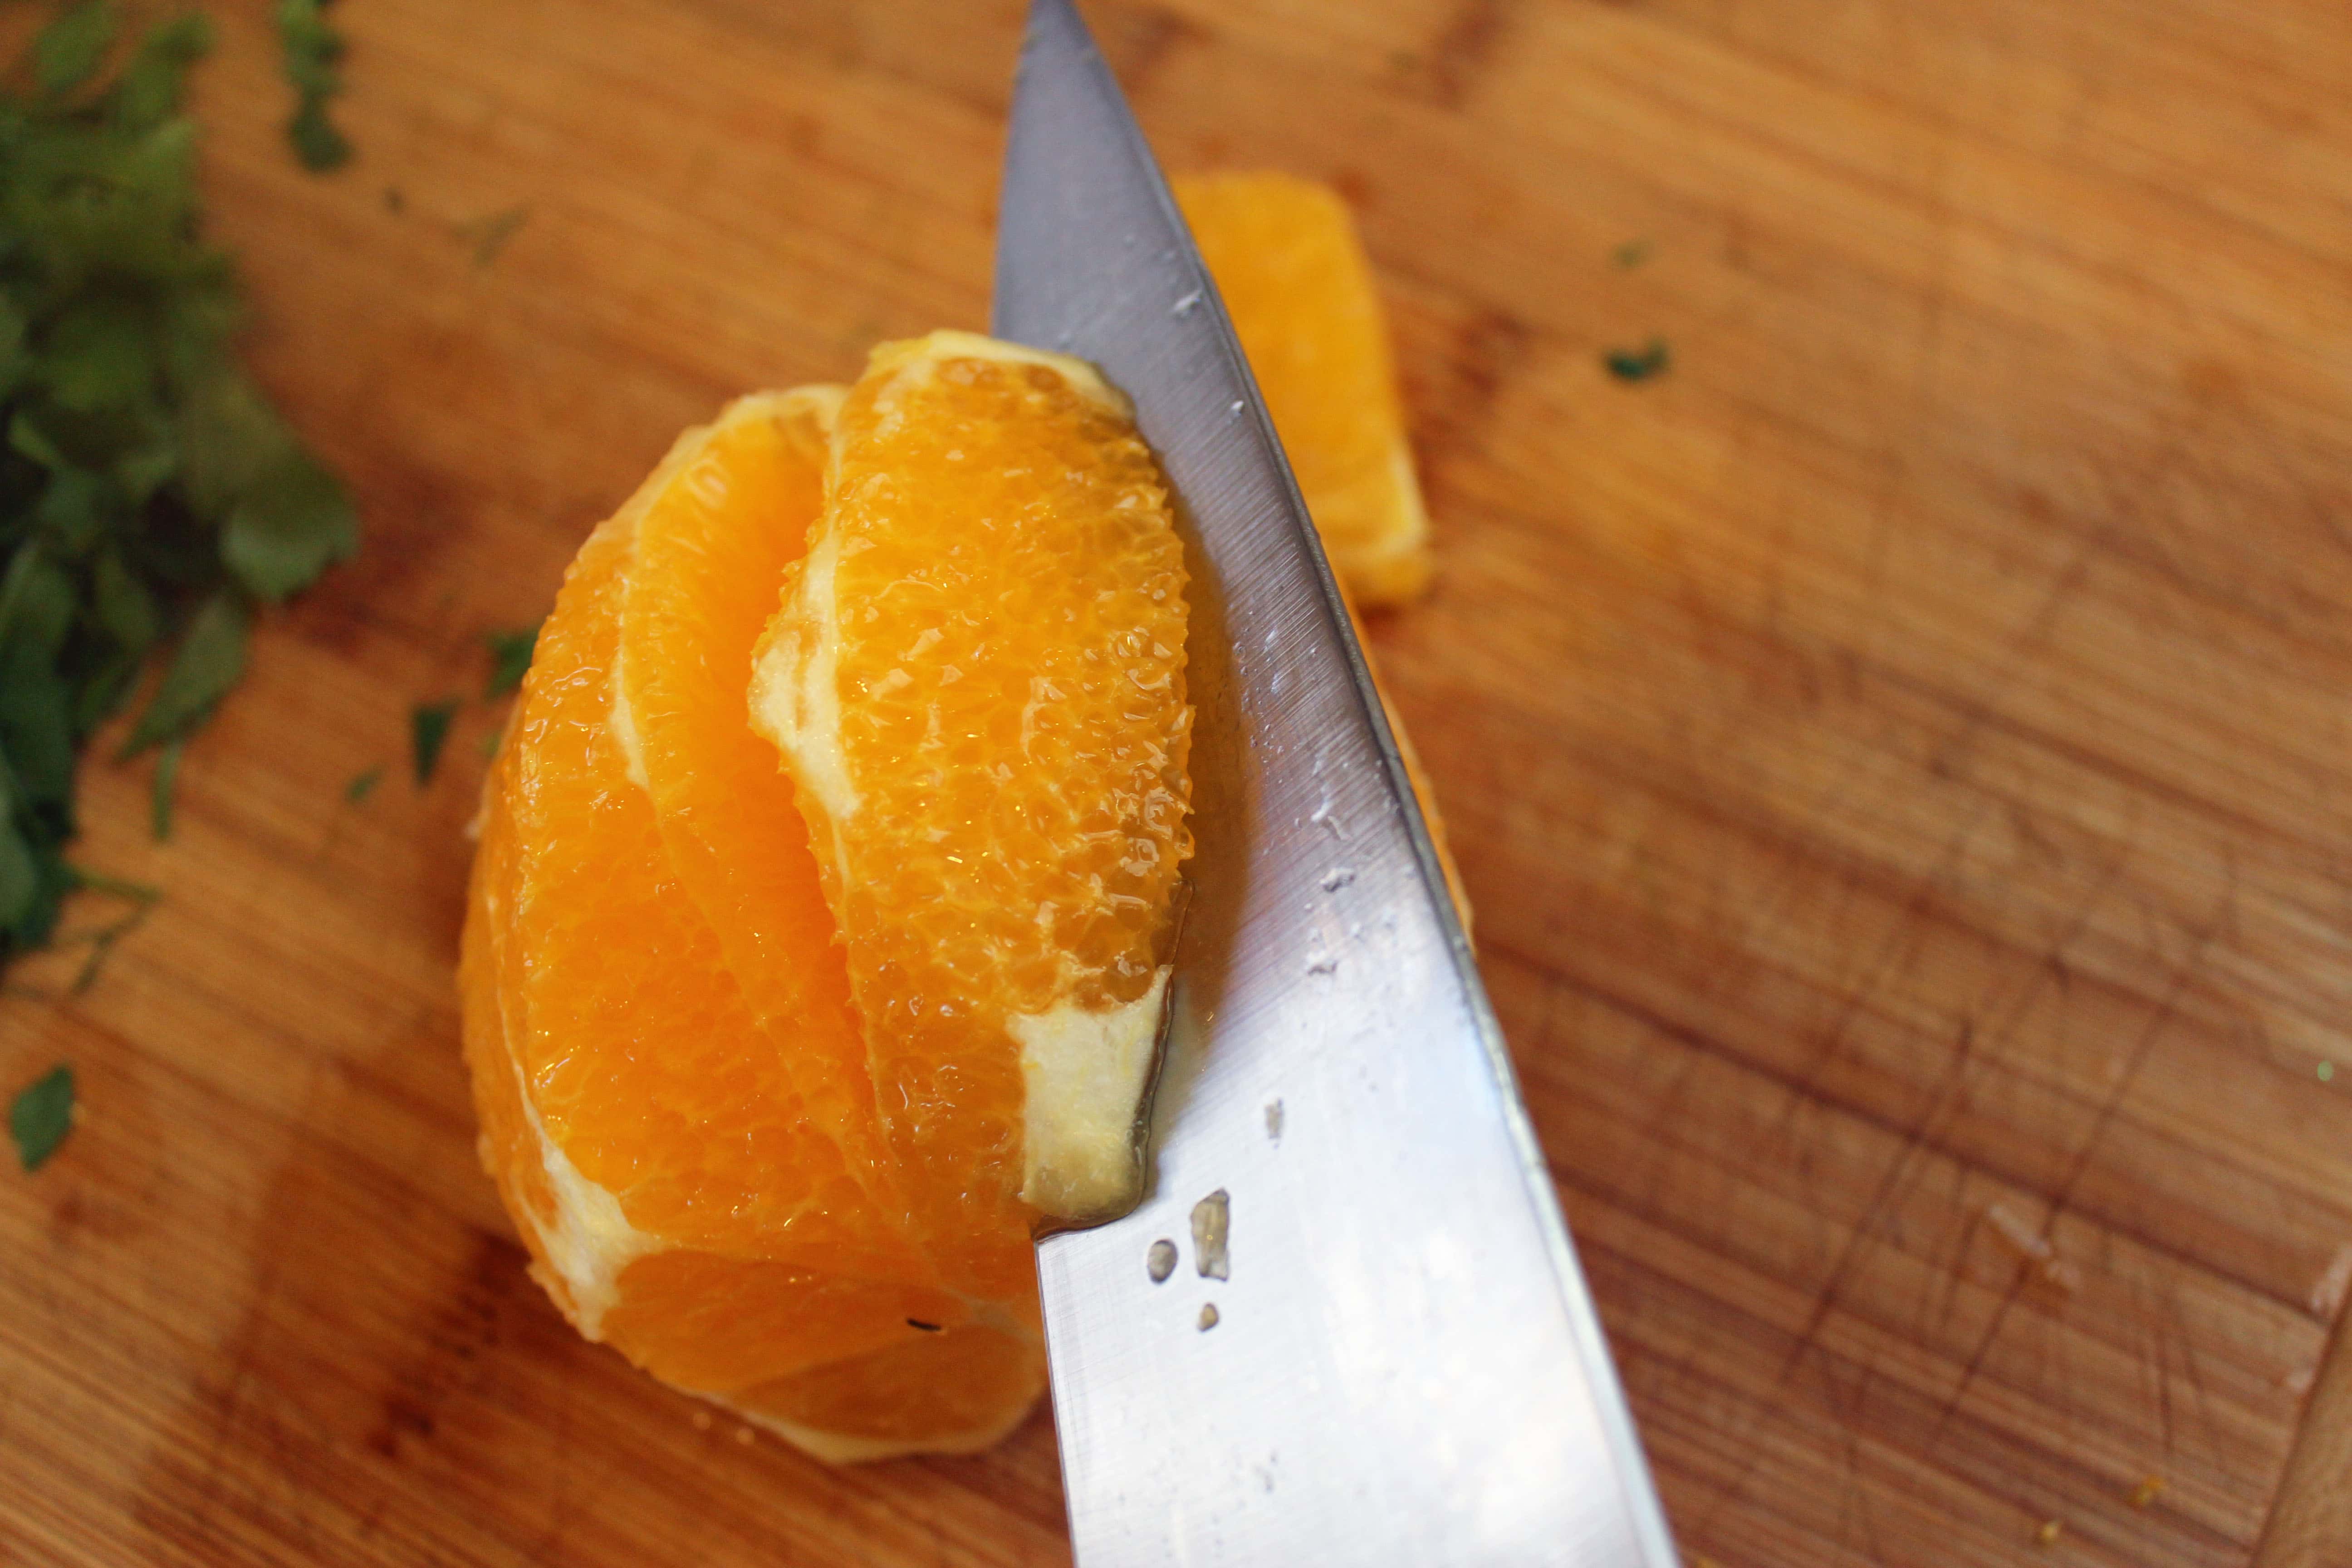 Cut into sides of orange segment